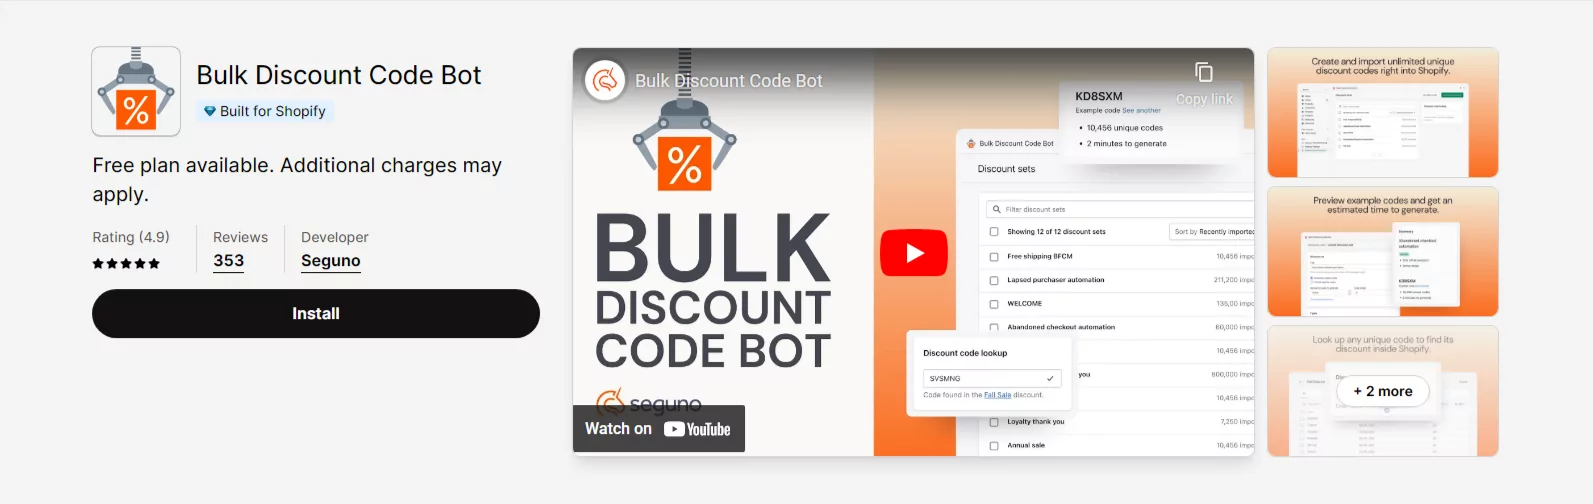 Bulk Discount Code Bot: Shopify App Overview